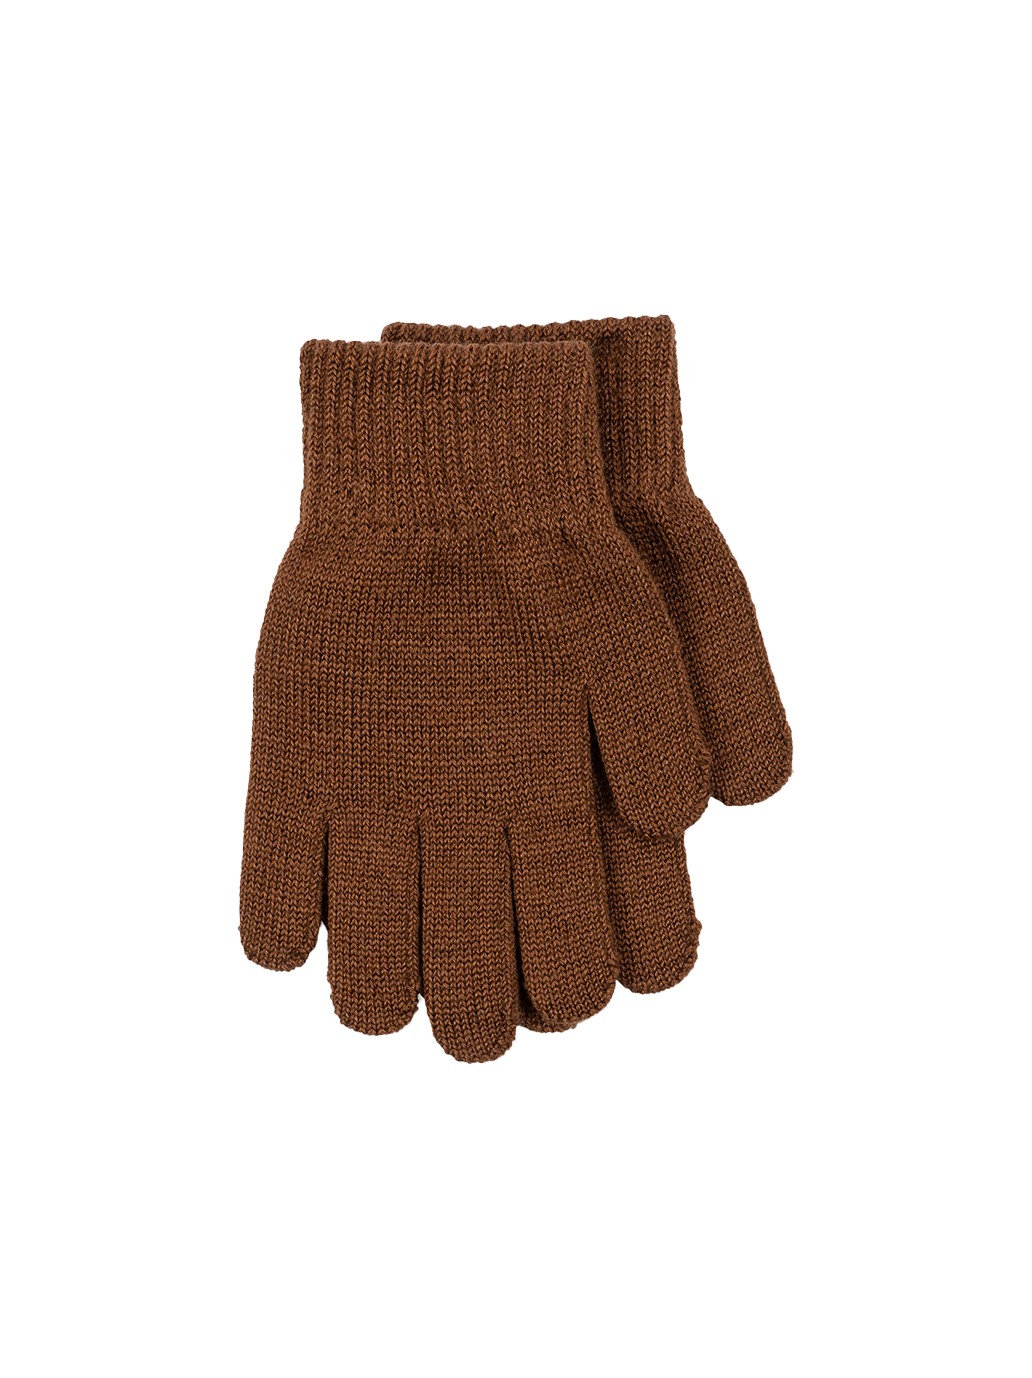 Filla gloves set